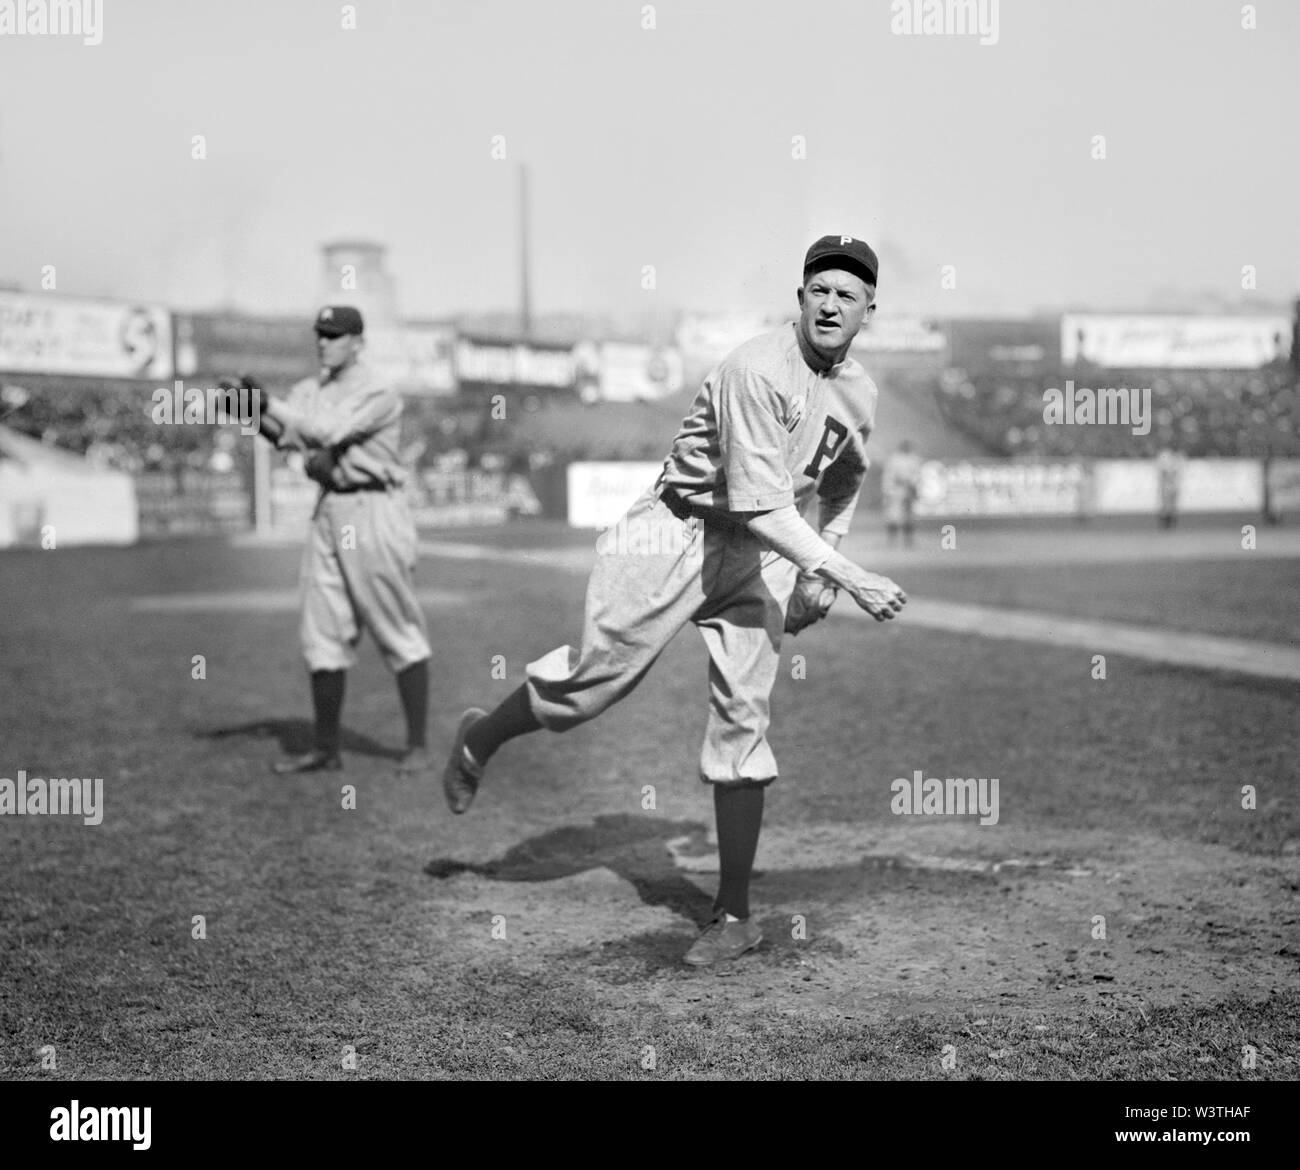 Grover Cleveland Alexander, Major League Baseball Player, Philadelphia Phillies, Half-Length Portrait, Bain News Service, 1911 Stock Photo